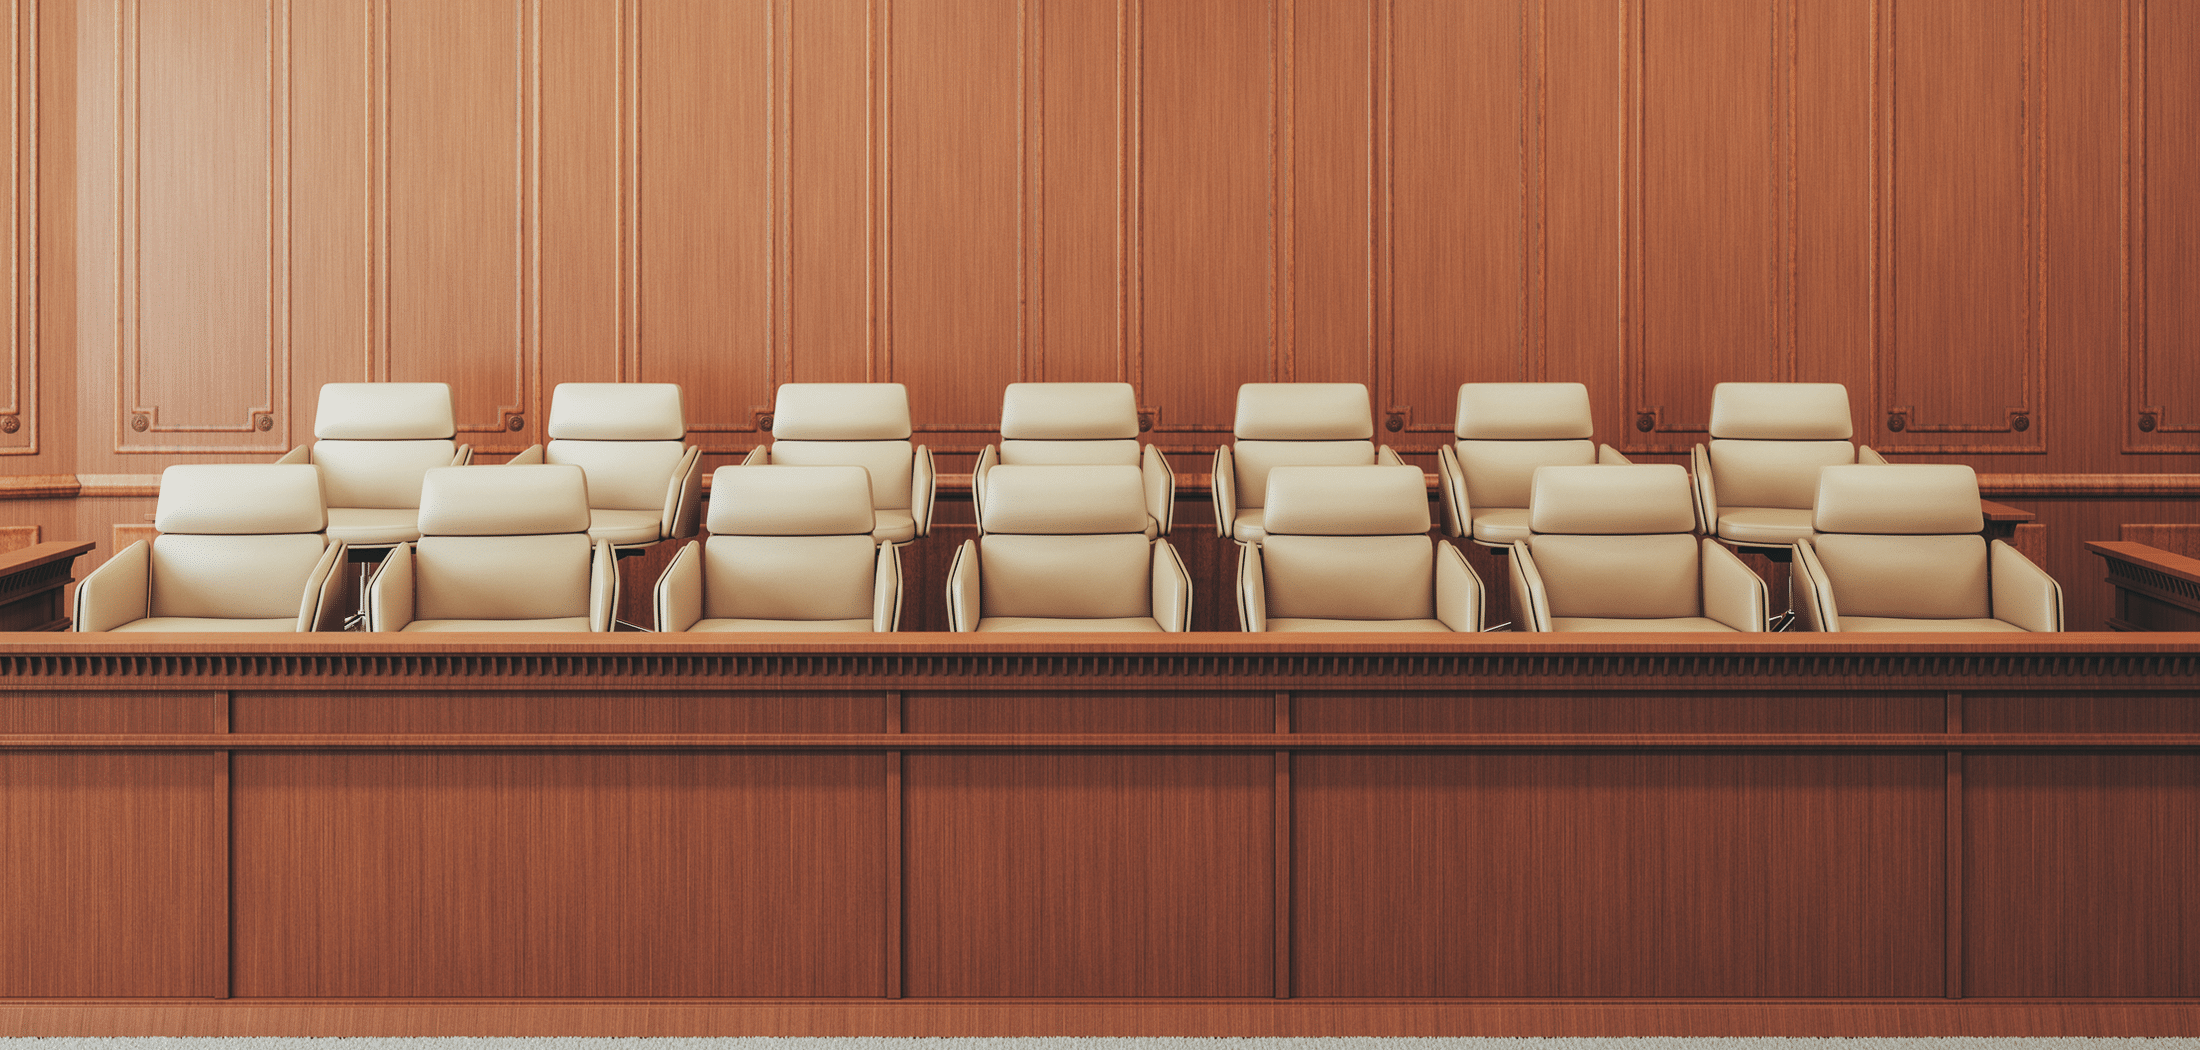 empty jury box, courtroom